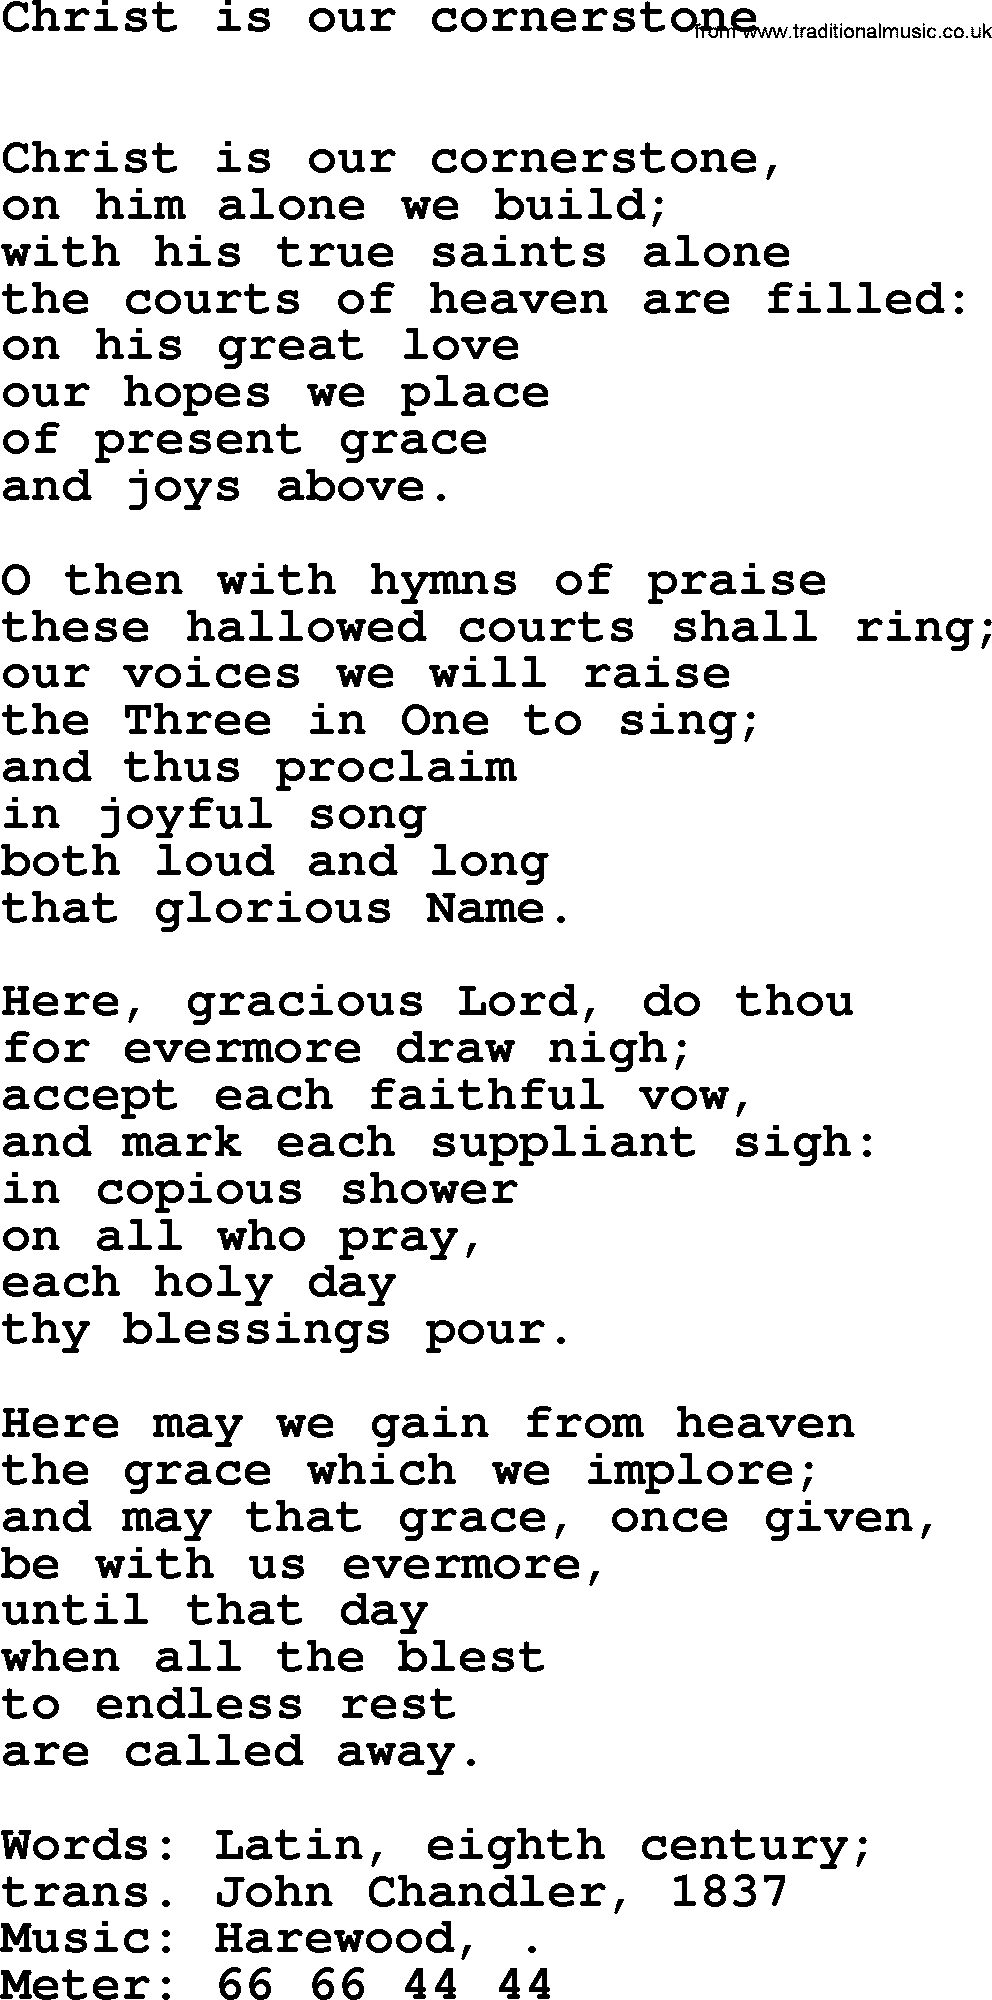 Book of Common Praise Hymn: Christ Is Our Cornerstone.txt lyrics with midi music